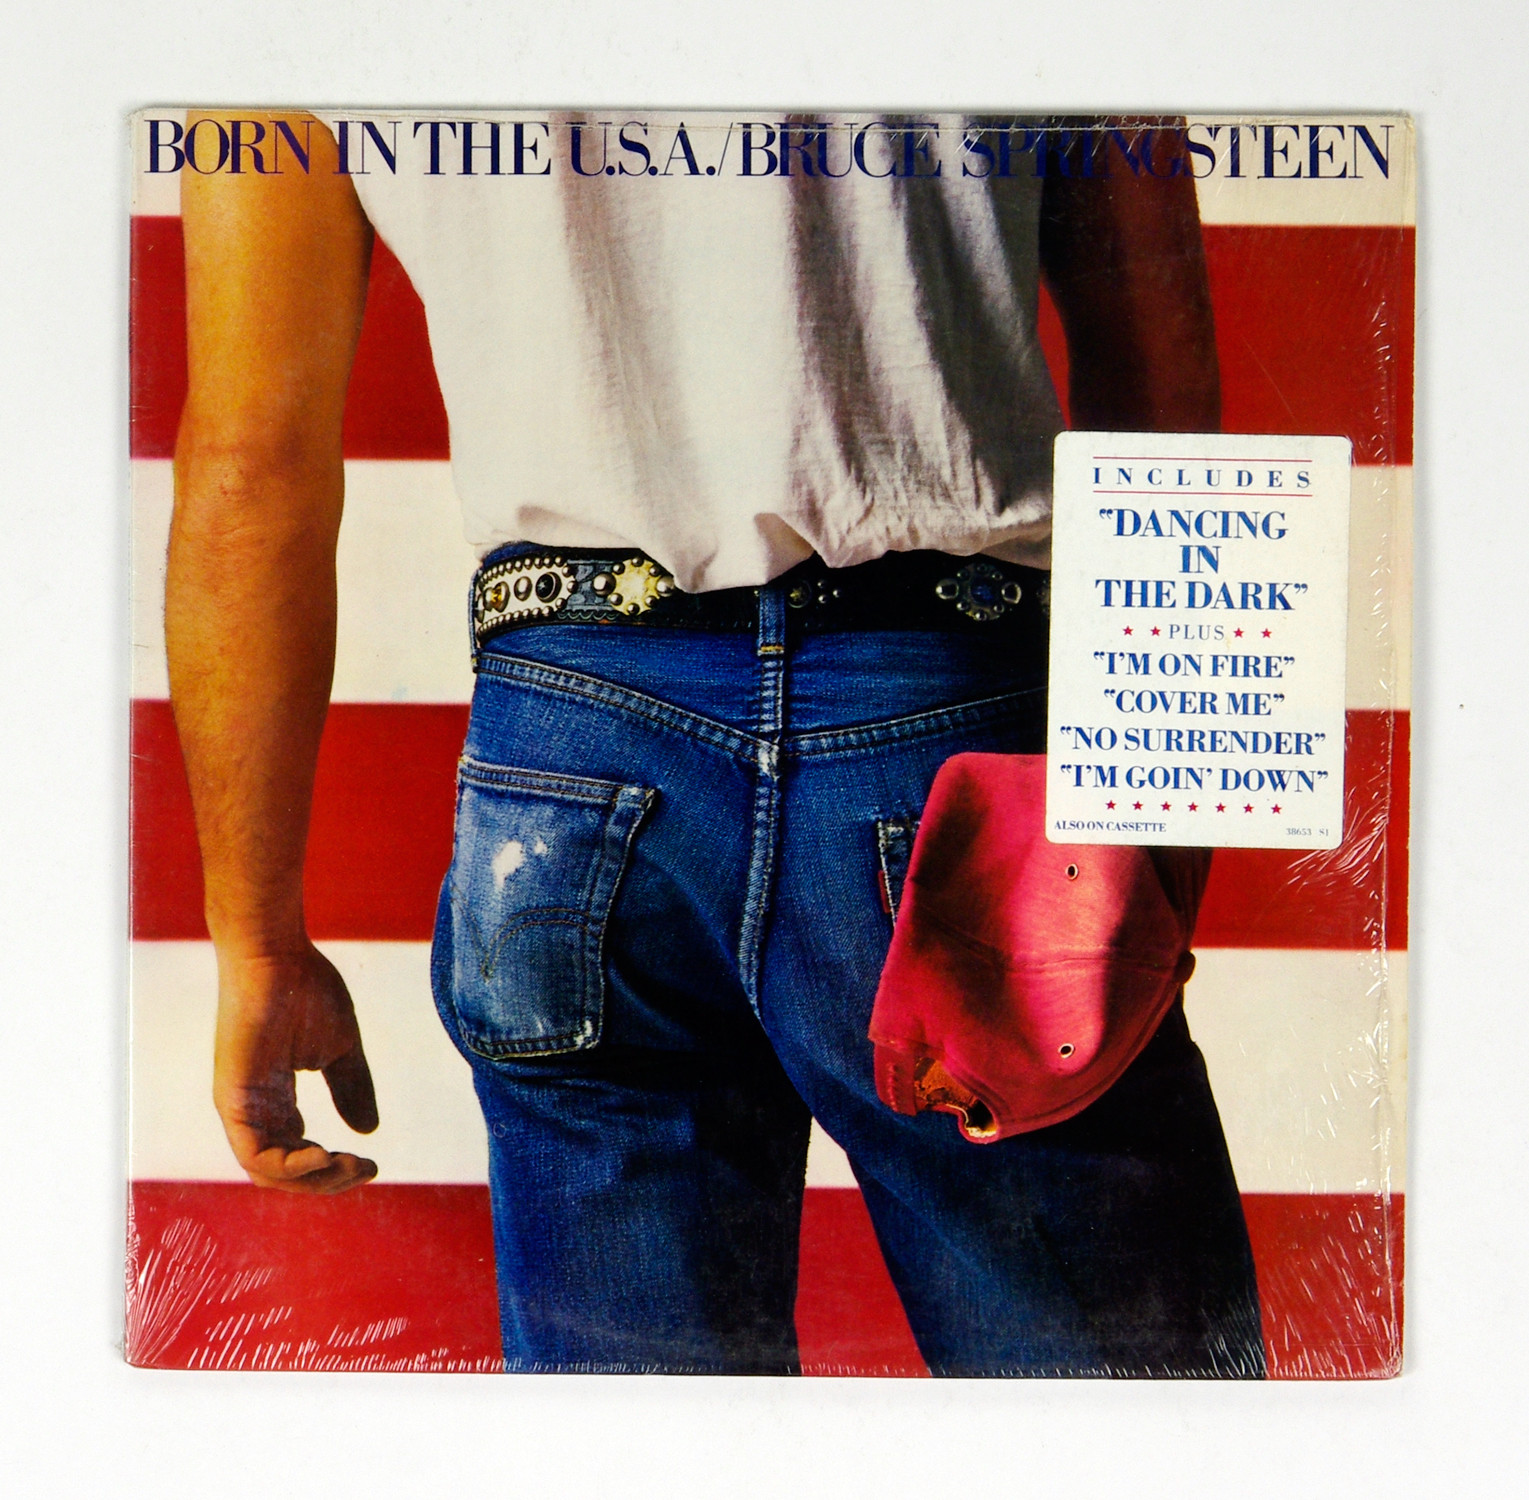 Bruce Springsteen Vinyl Born In The U.S.A. 1984